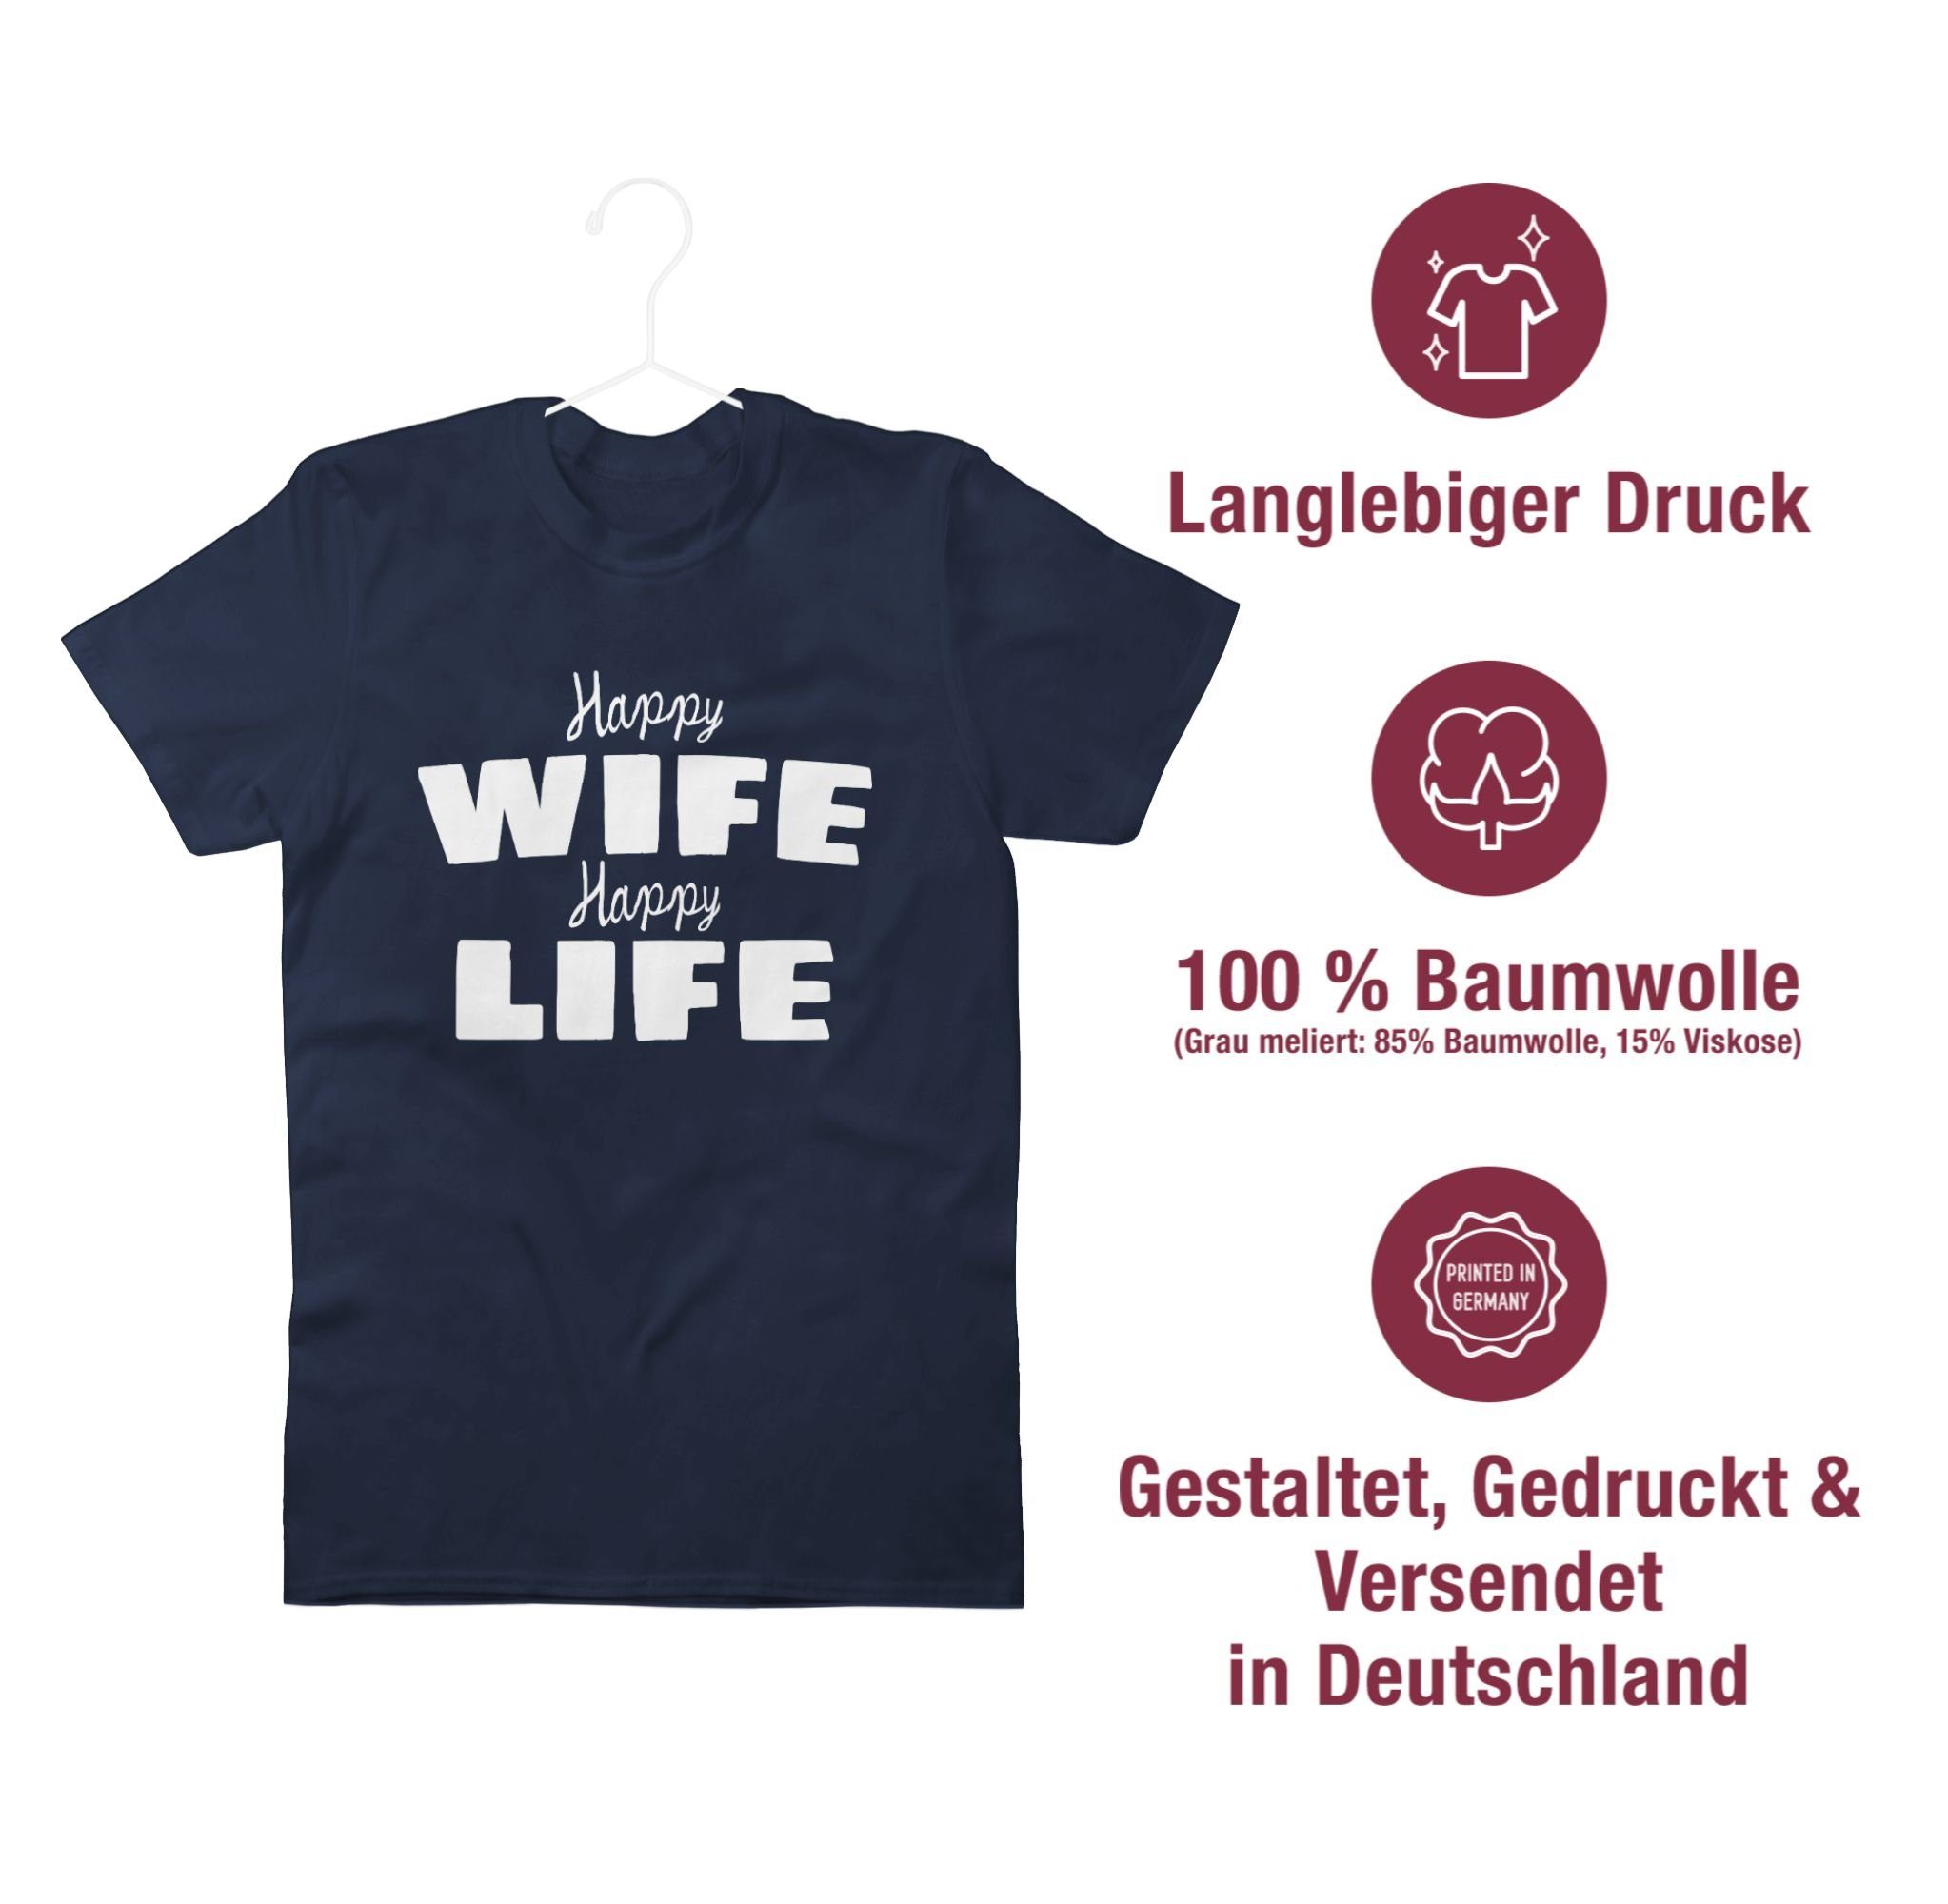 Shirtracer Navy Statement happy life T-Shirt Blau wife Sprüche 02 Happy